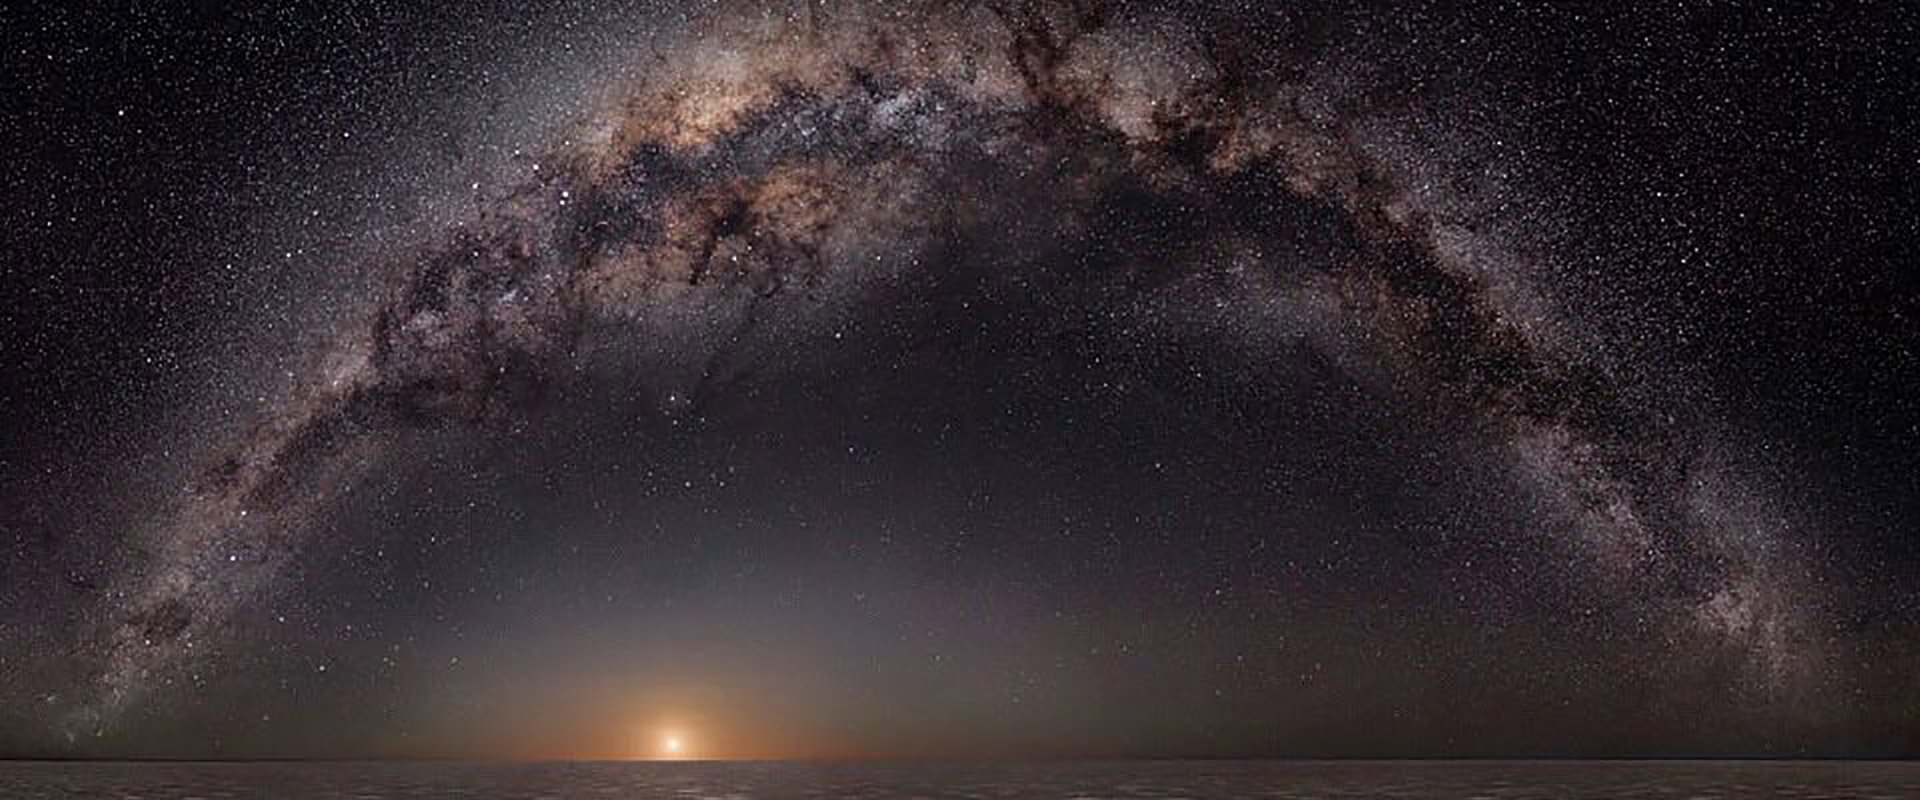 Milky Way over Kati Thanda-Lake Eyre, Outback, source @murrayfredericks (via IG)